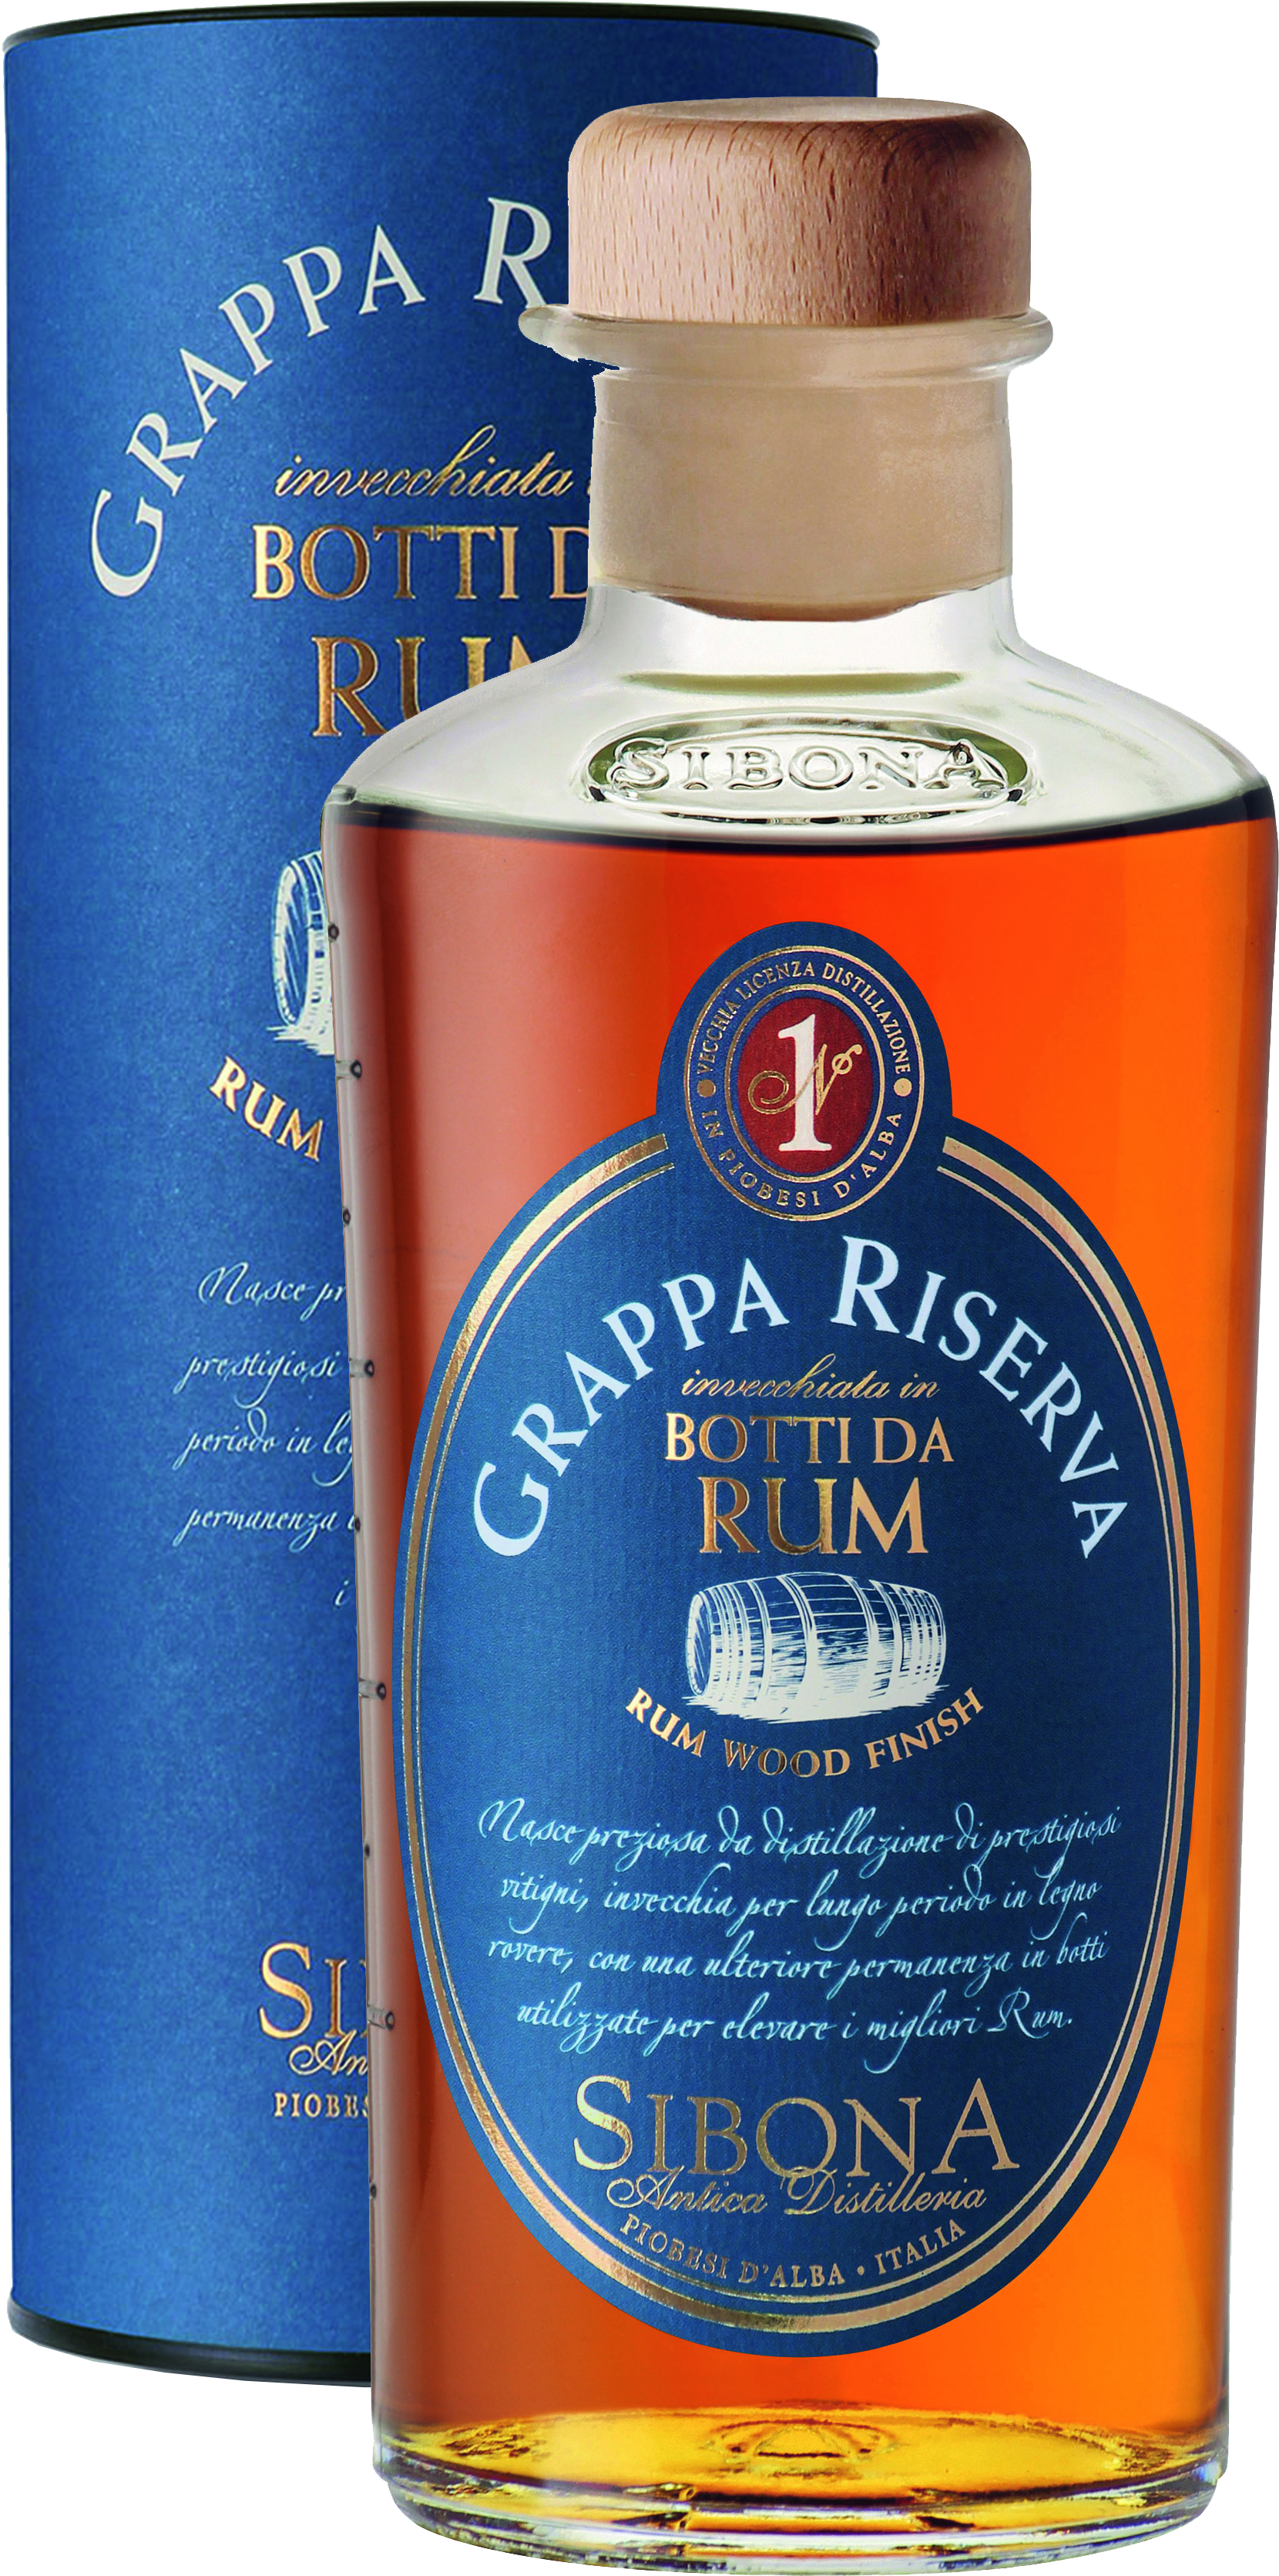 Botti of Rum Riserva Sibona Spirits da Club Grappa |